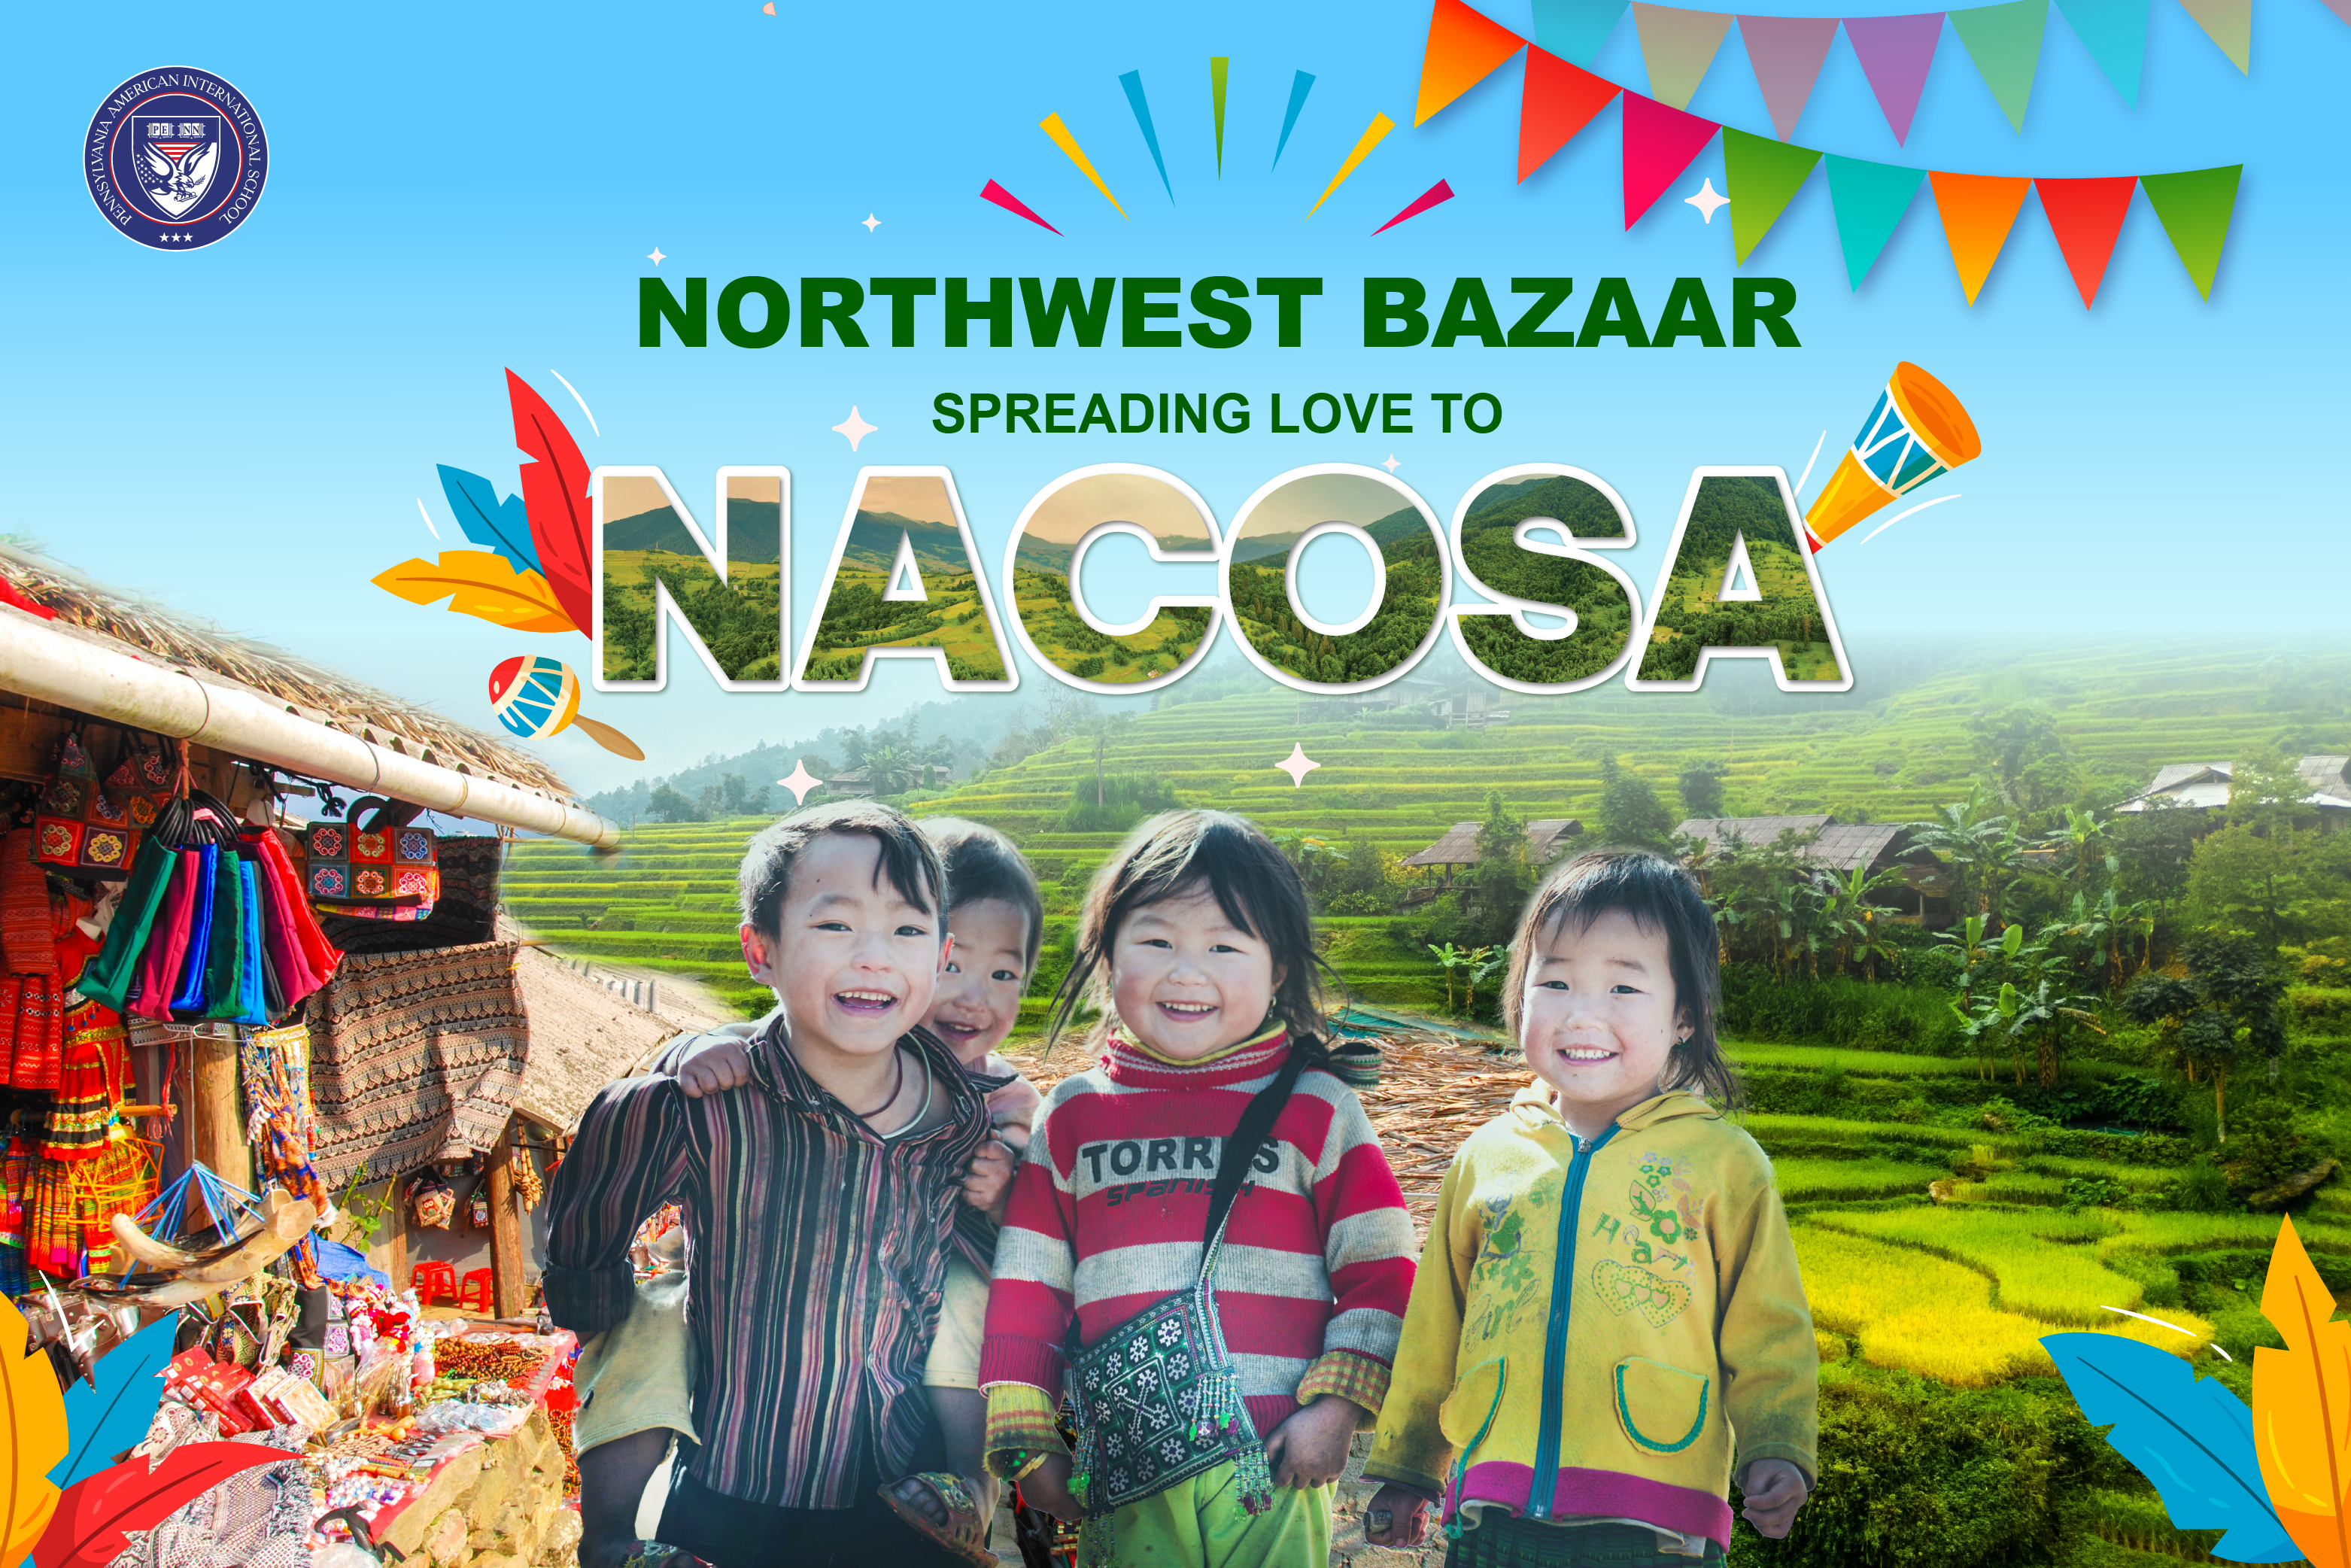 cho-phien-gay-quy-northwest-bazaar-spreading-love-to-nacosa